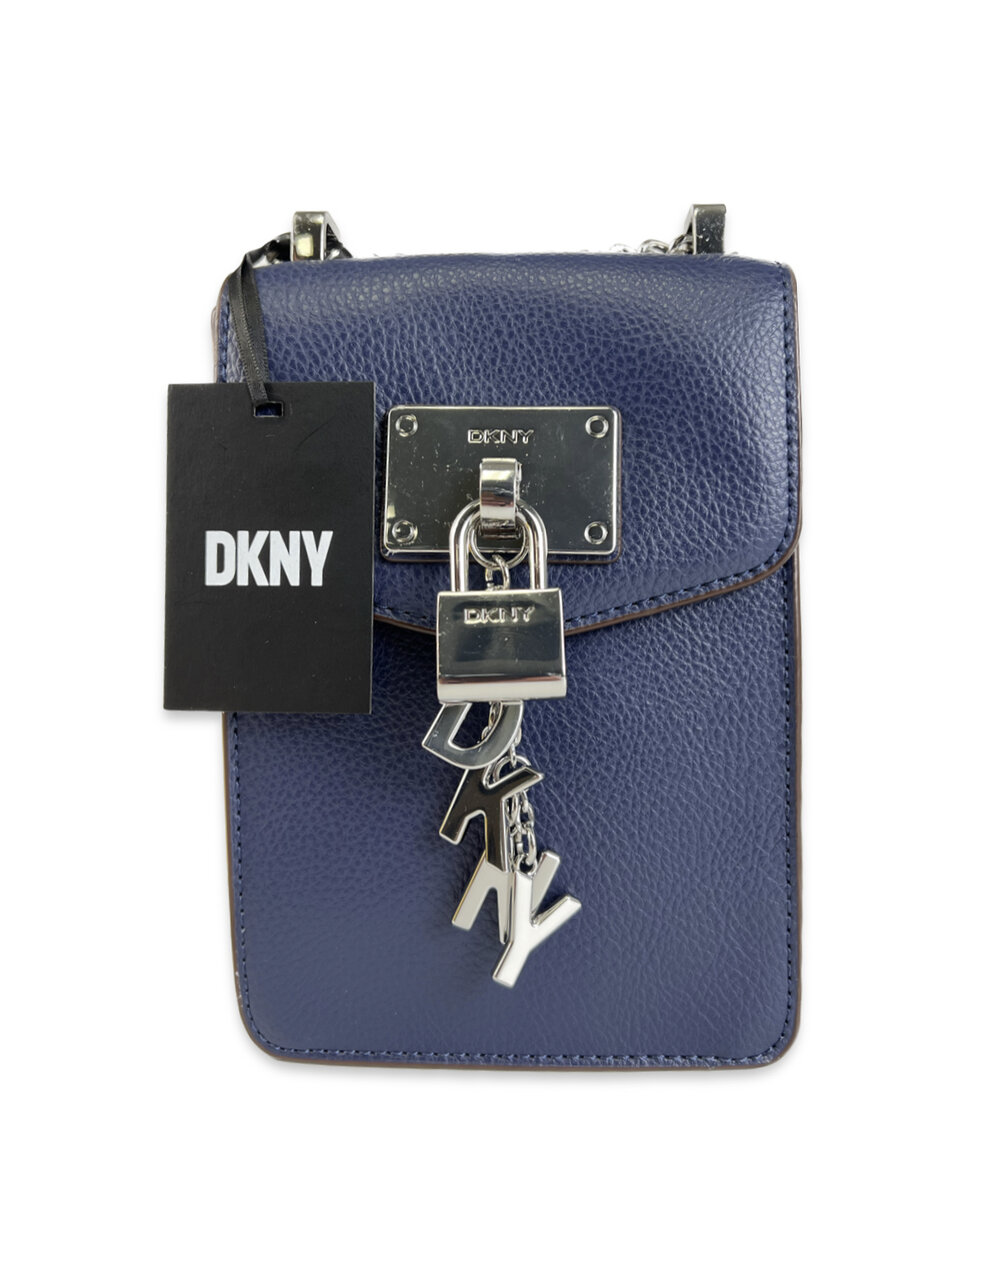 DKNY Elissa North South Charm and Lock Crossbody Bag